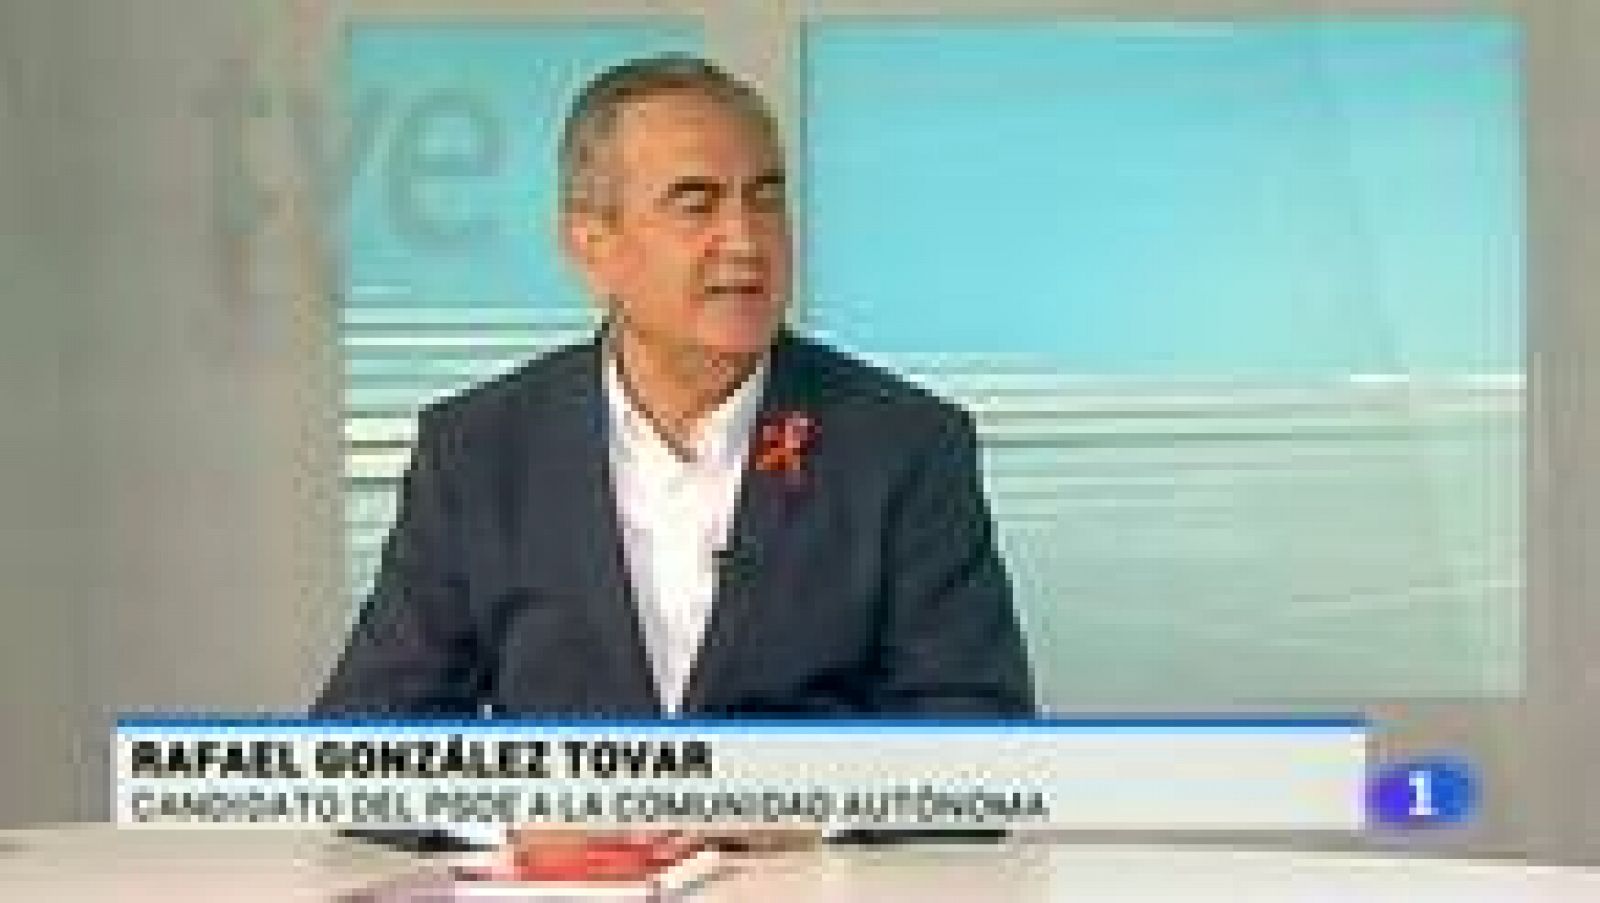 Noticias Murcia: Candidato PSOE Comunidad Autonoma Murcia. 21-05-2015 | RTVE Play